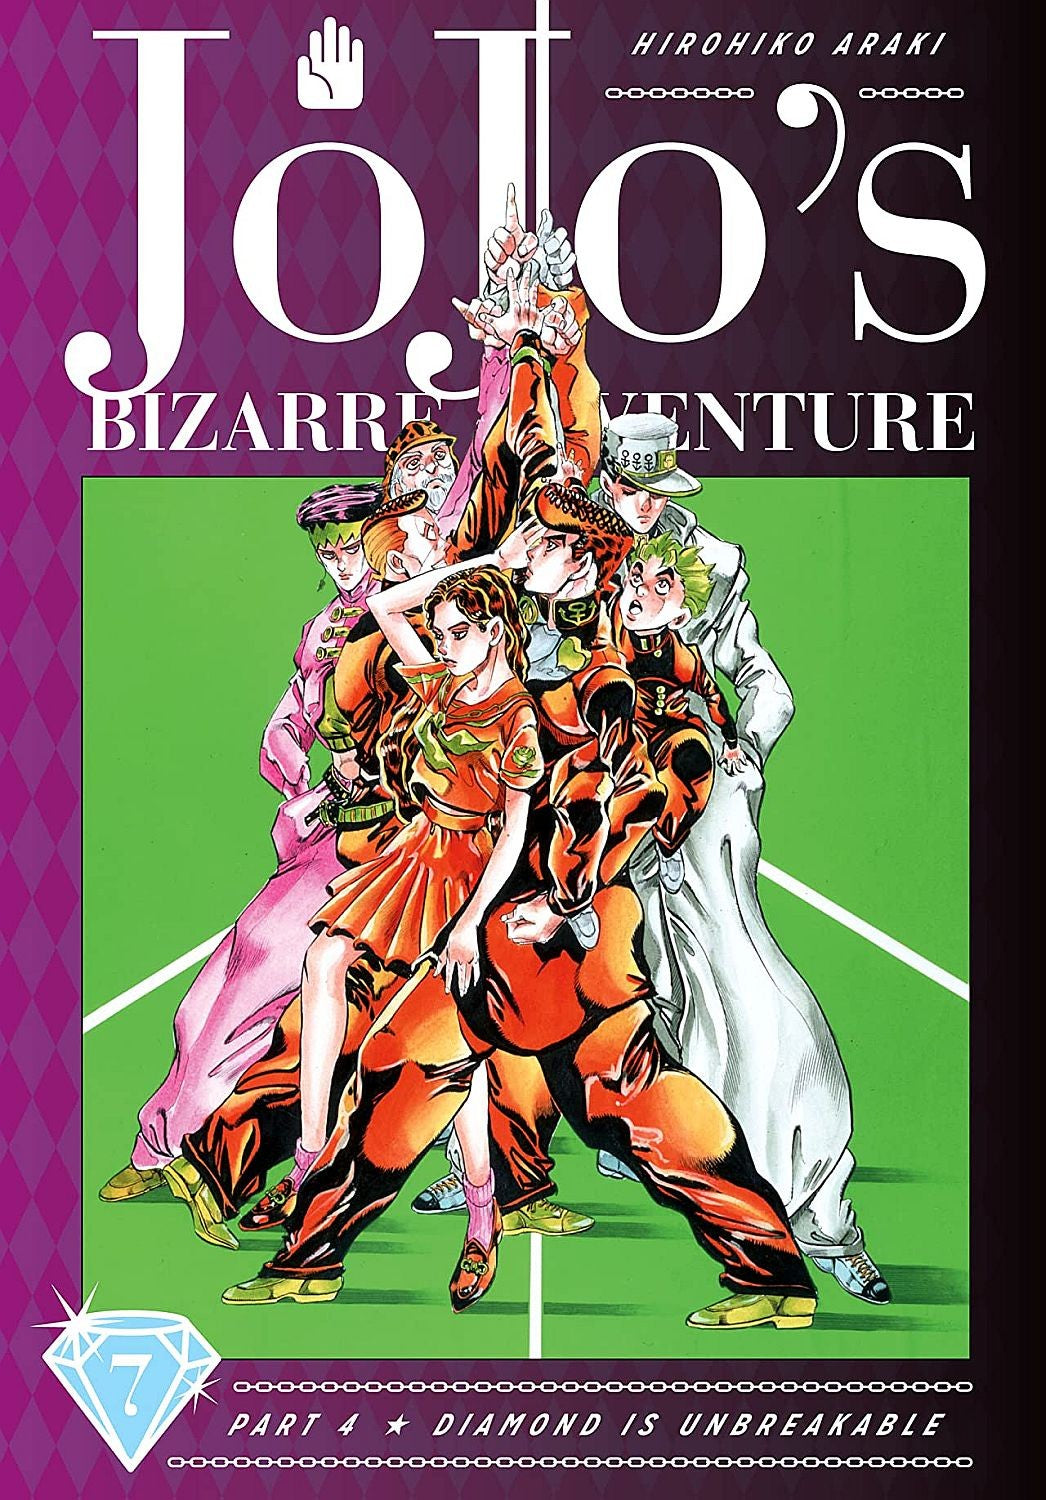 Jojo's Bizarre Adventure Part 4 Diamond is Unbreakable Volume 7 Hardcover